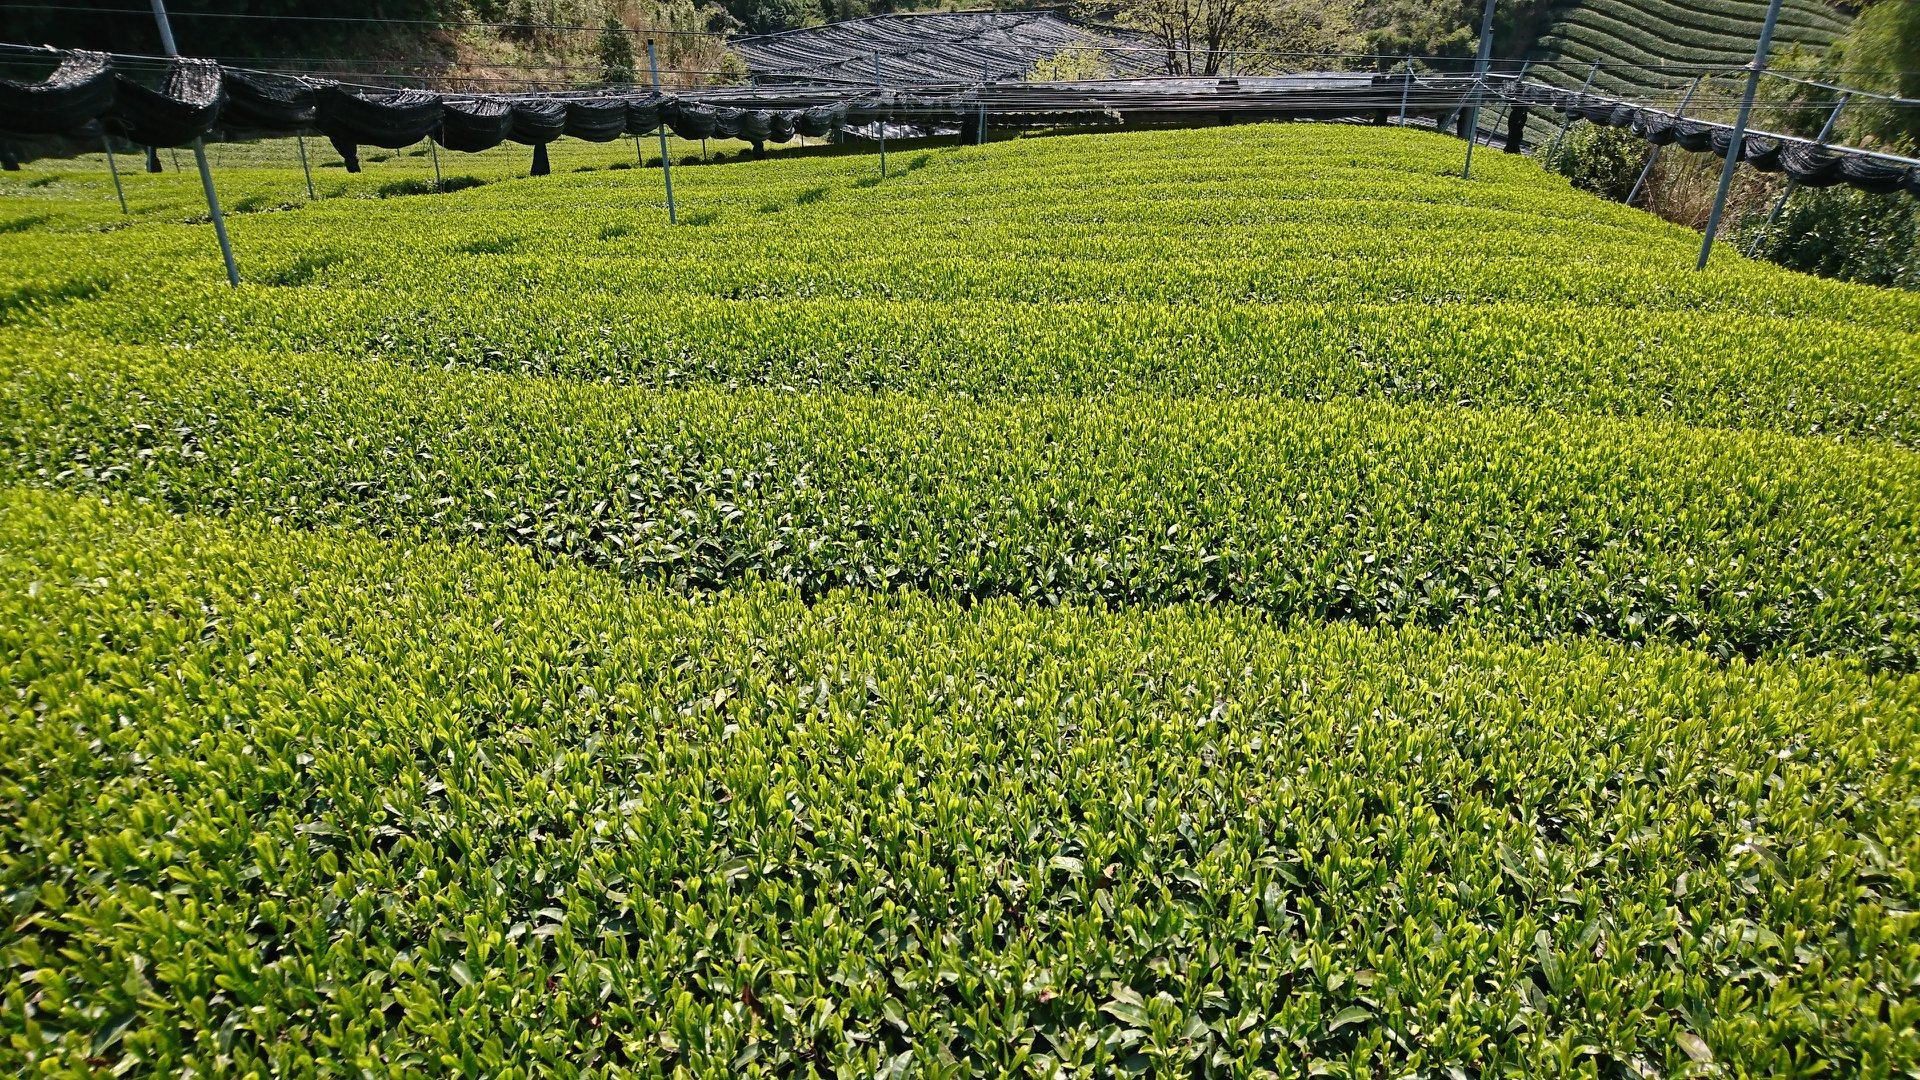 Japanese green tea -Gyokuro- Powder stick 1.5g X3 Made in Uji Kyoto